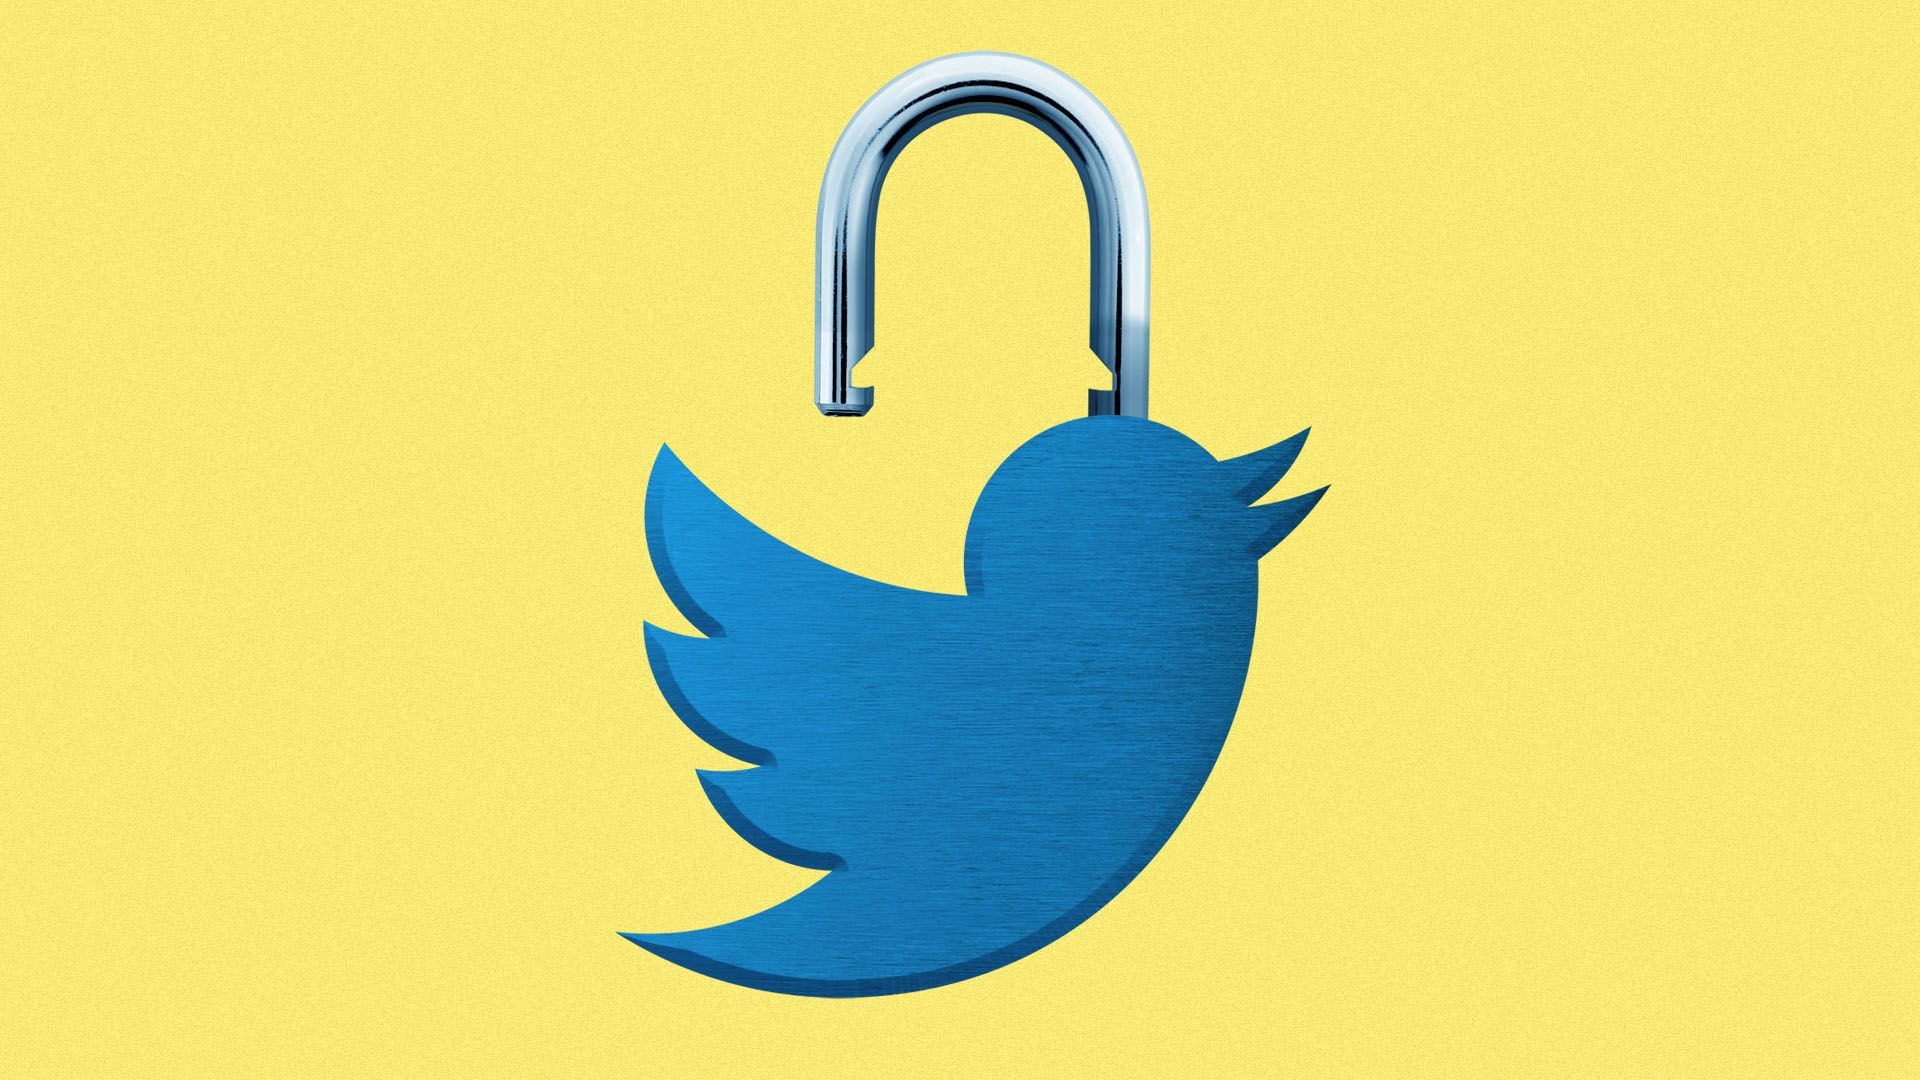 Illustration of the twitter bird logo as an open padlock